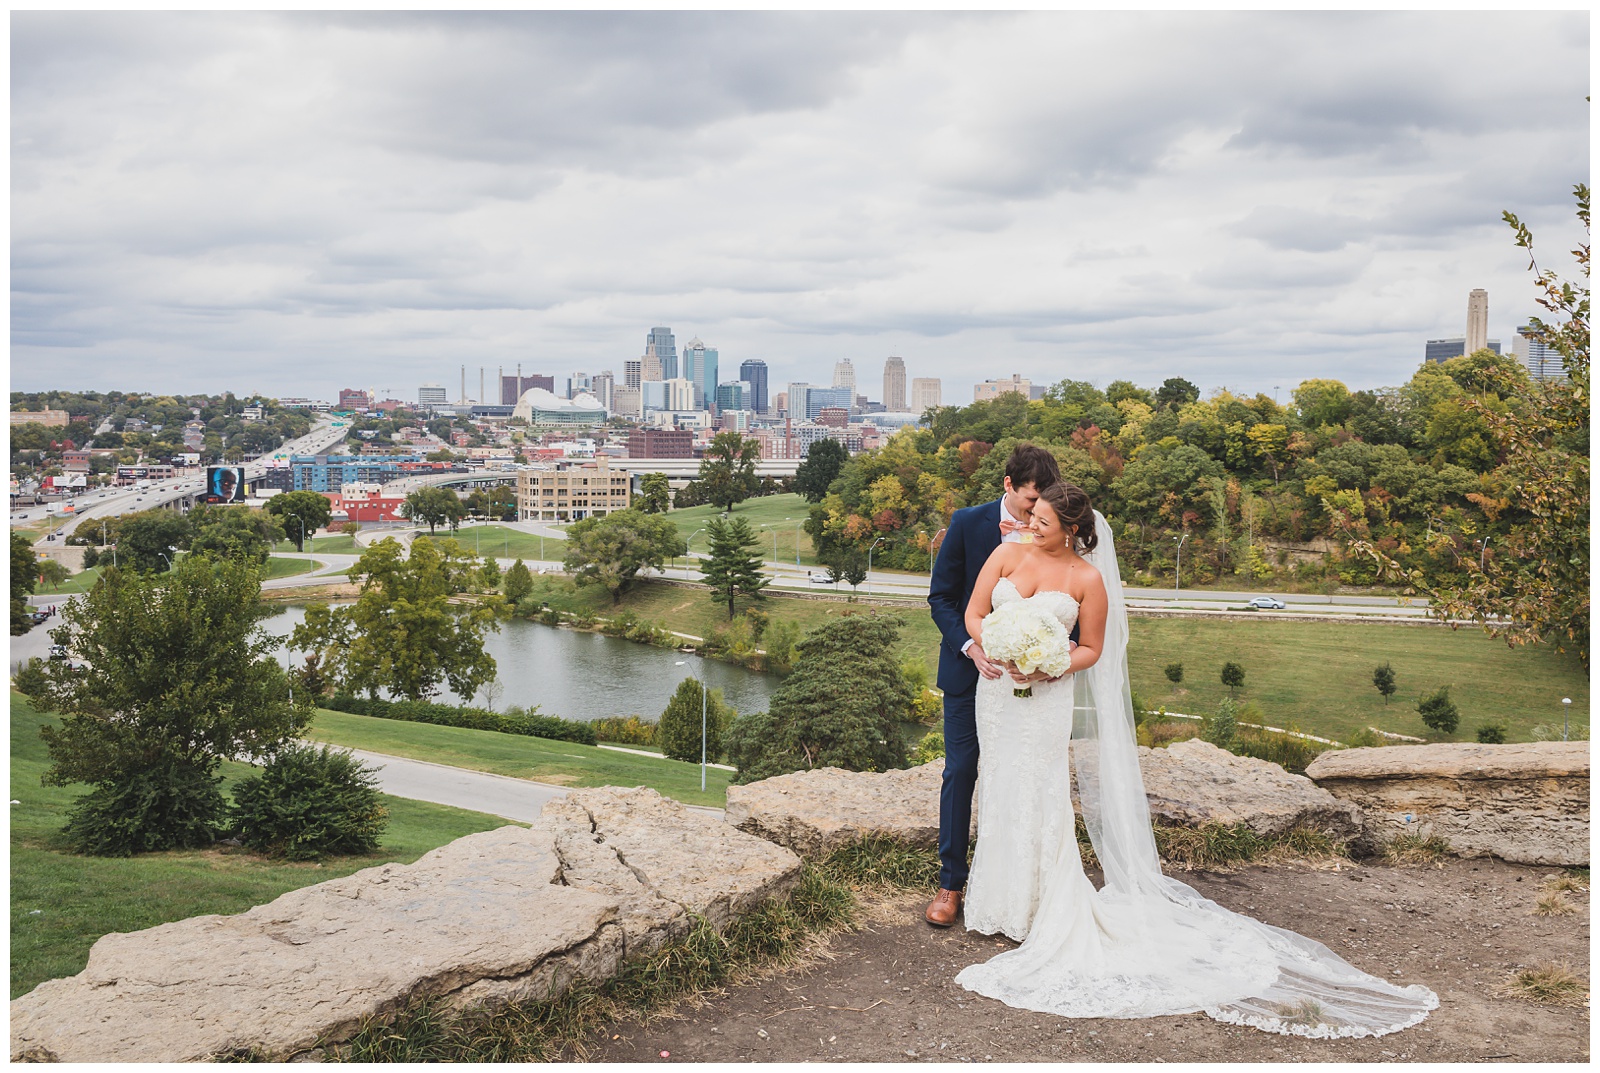 Wedding photography at Penn Valley Park by Kansas City wedding photographers Wisdom-Watson Weddings.